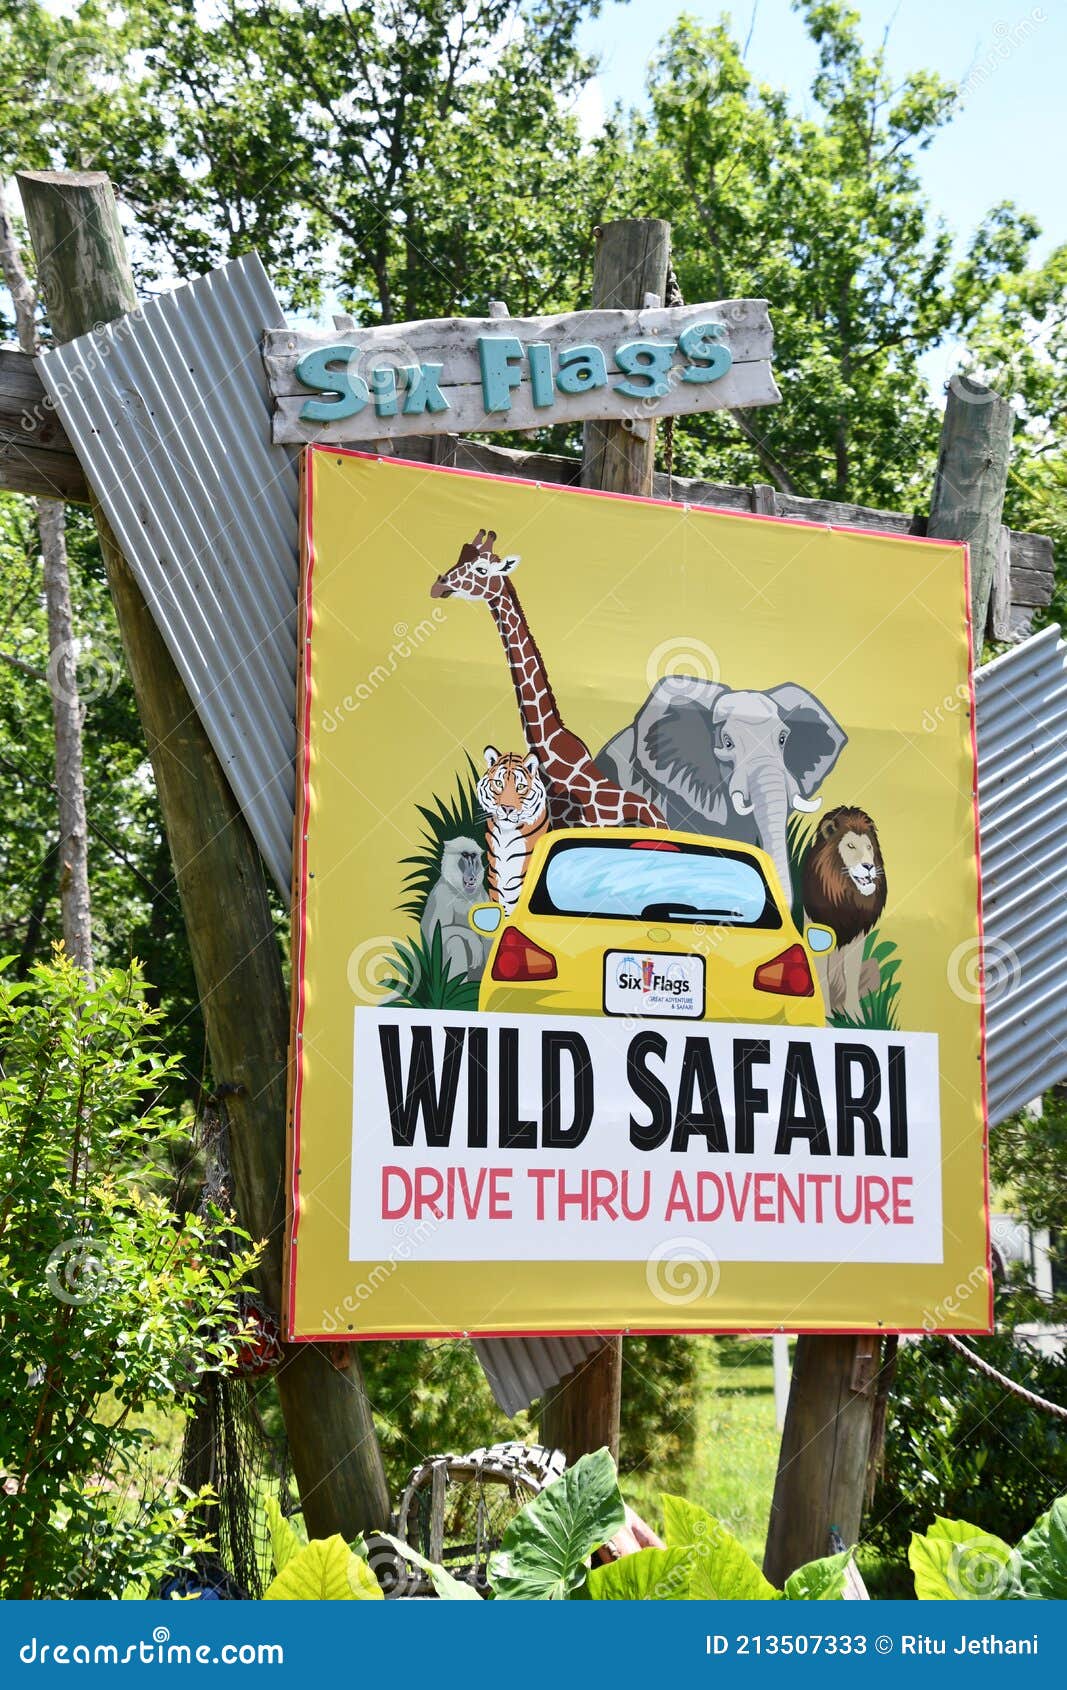 safari ride new jersey